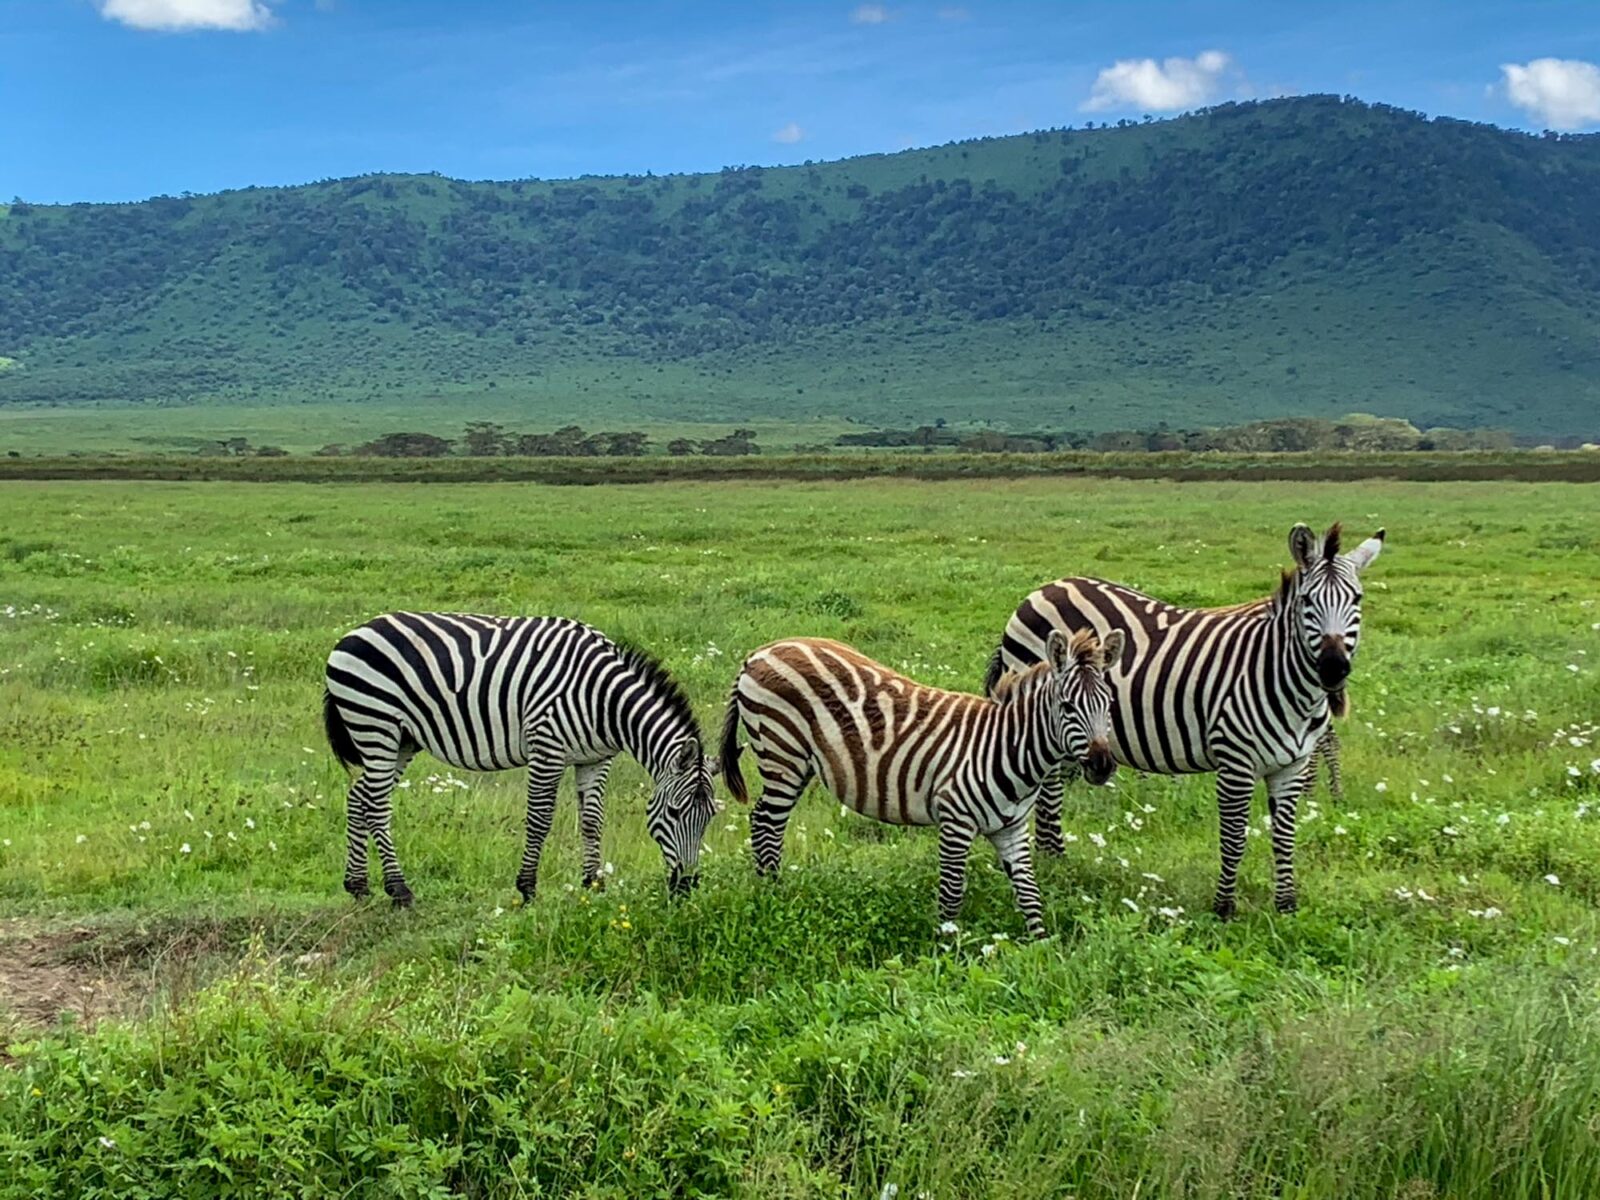 Foresight Ecolodge & Safari – Zebras